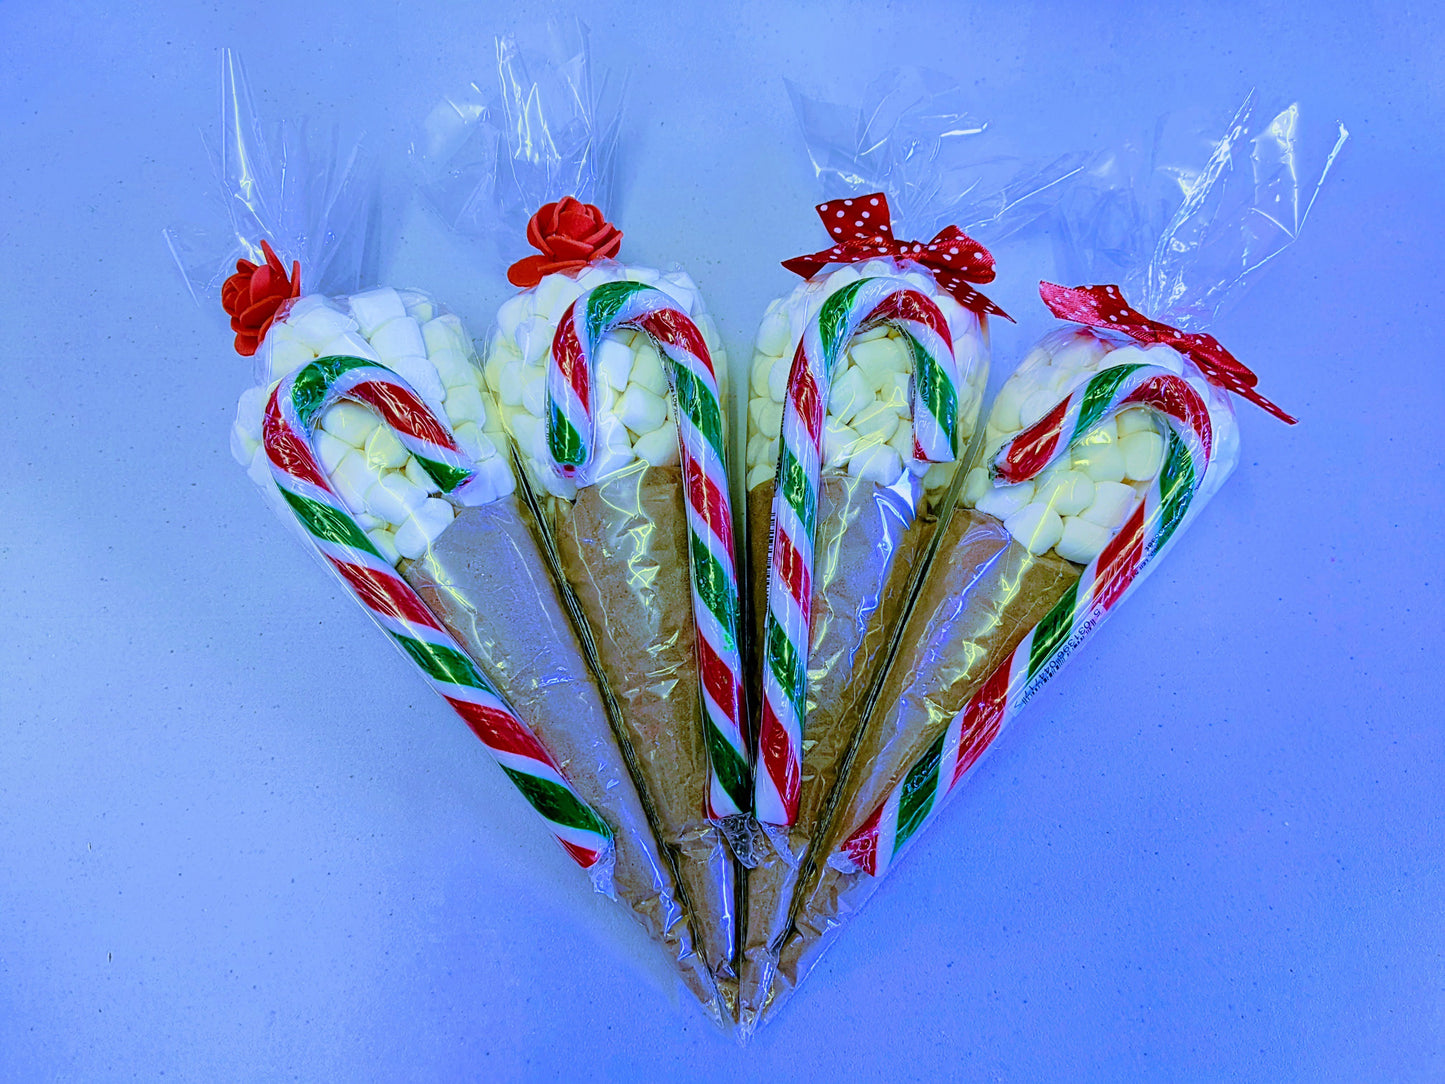 Elegant Christmas Themed Sweet Cones